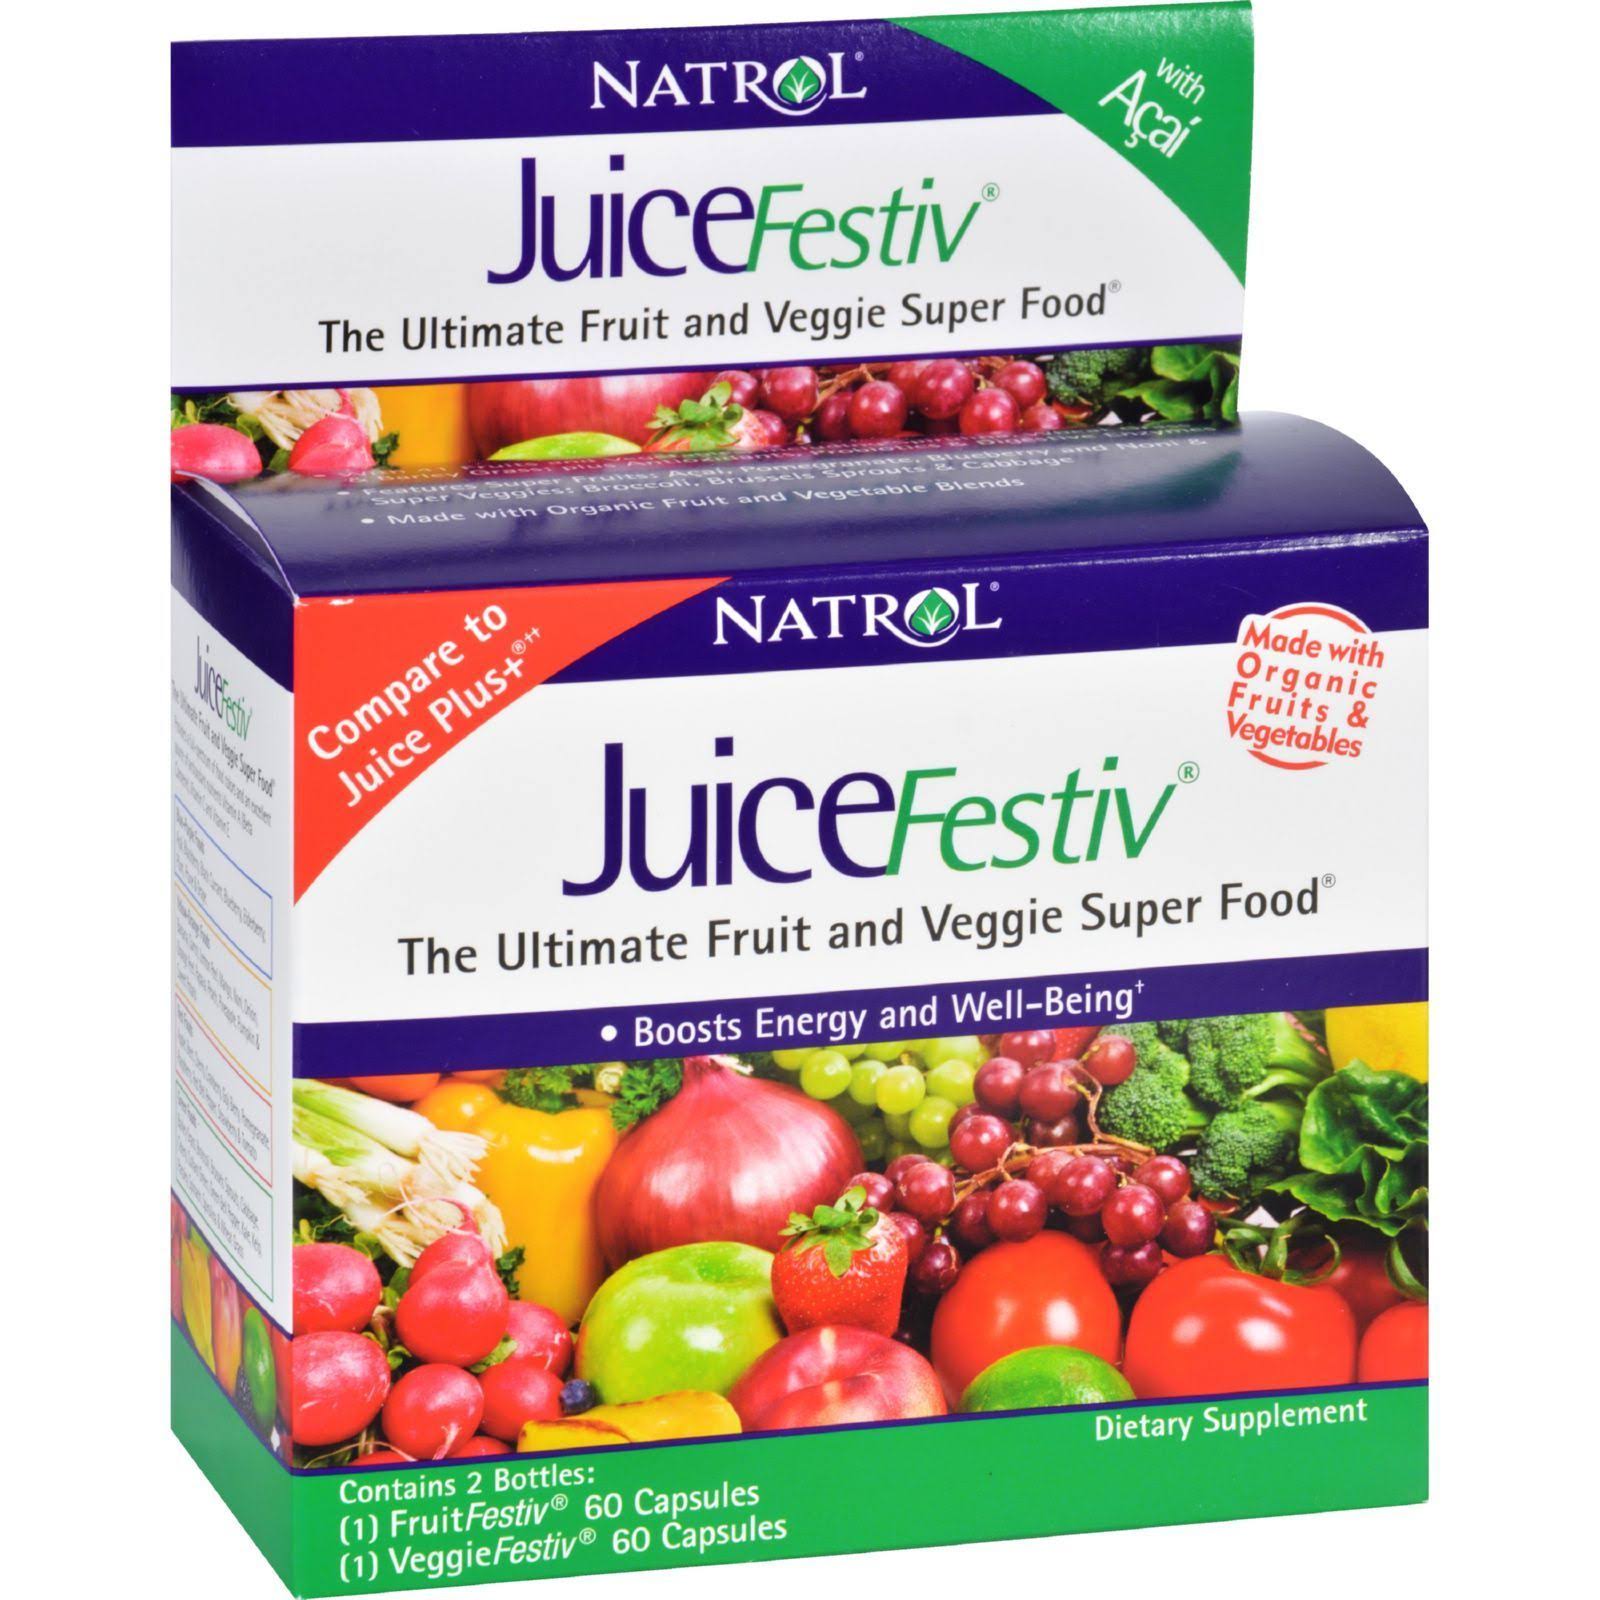 Natrol JuiceFestiv The Ultimate Fruit and Veggie Super Food - 2 Bottles, 120 Capsules